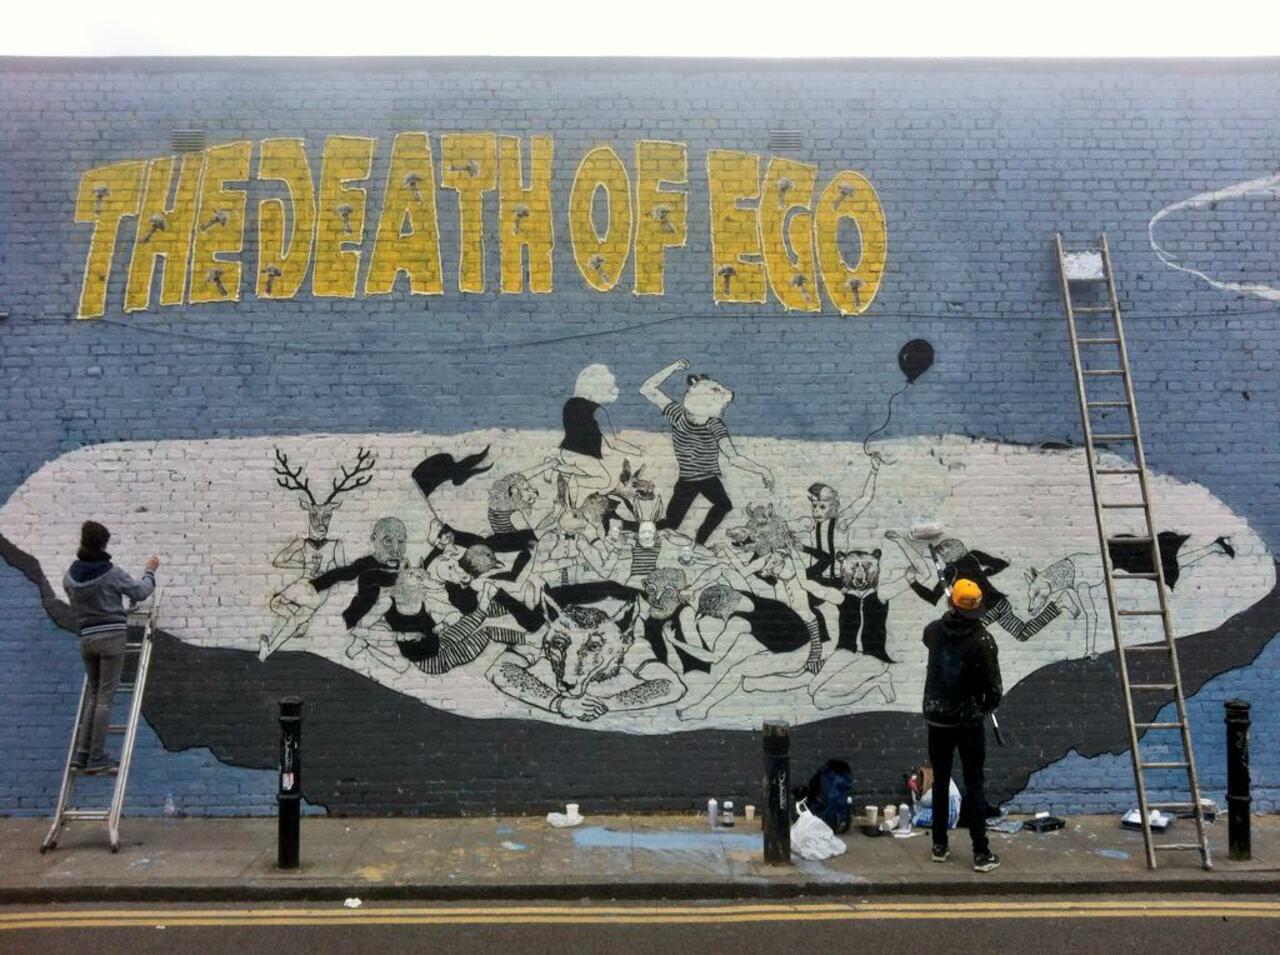 RT @BrickLaneArt: The Death of Ego

New work by @hausofpang on Hanbury Street #art #streetart #graffiti http://t.co/yG9j6t0oZa